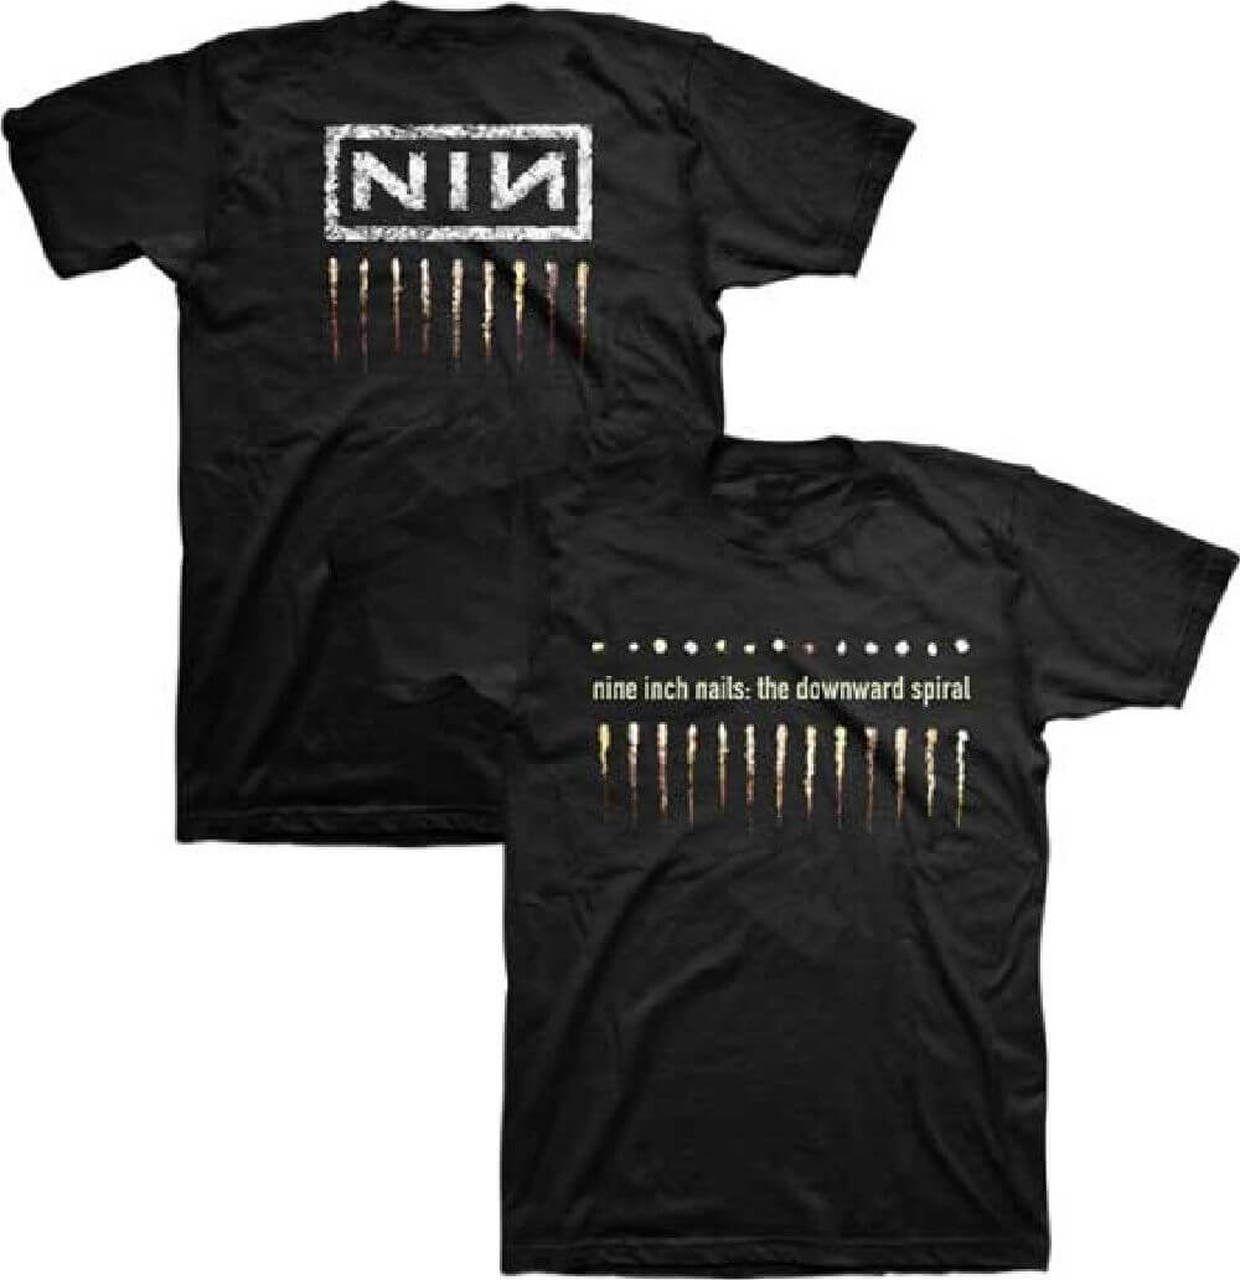 Nin Logo - Nine Inch Nails T-shirt - Nine Inch Nails The Downward Spiral Album Artwork  with NIN Logo. Men's Black Shirt